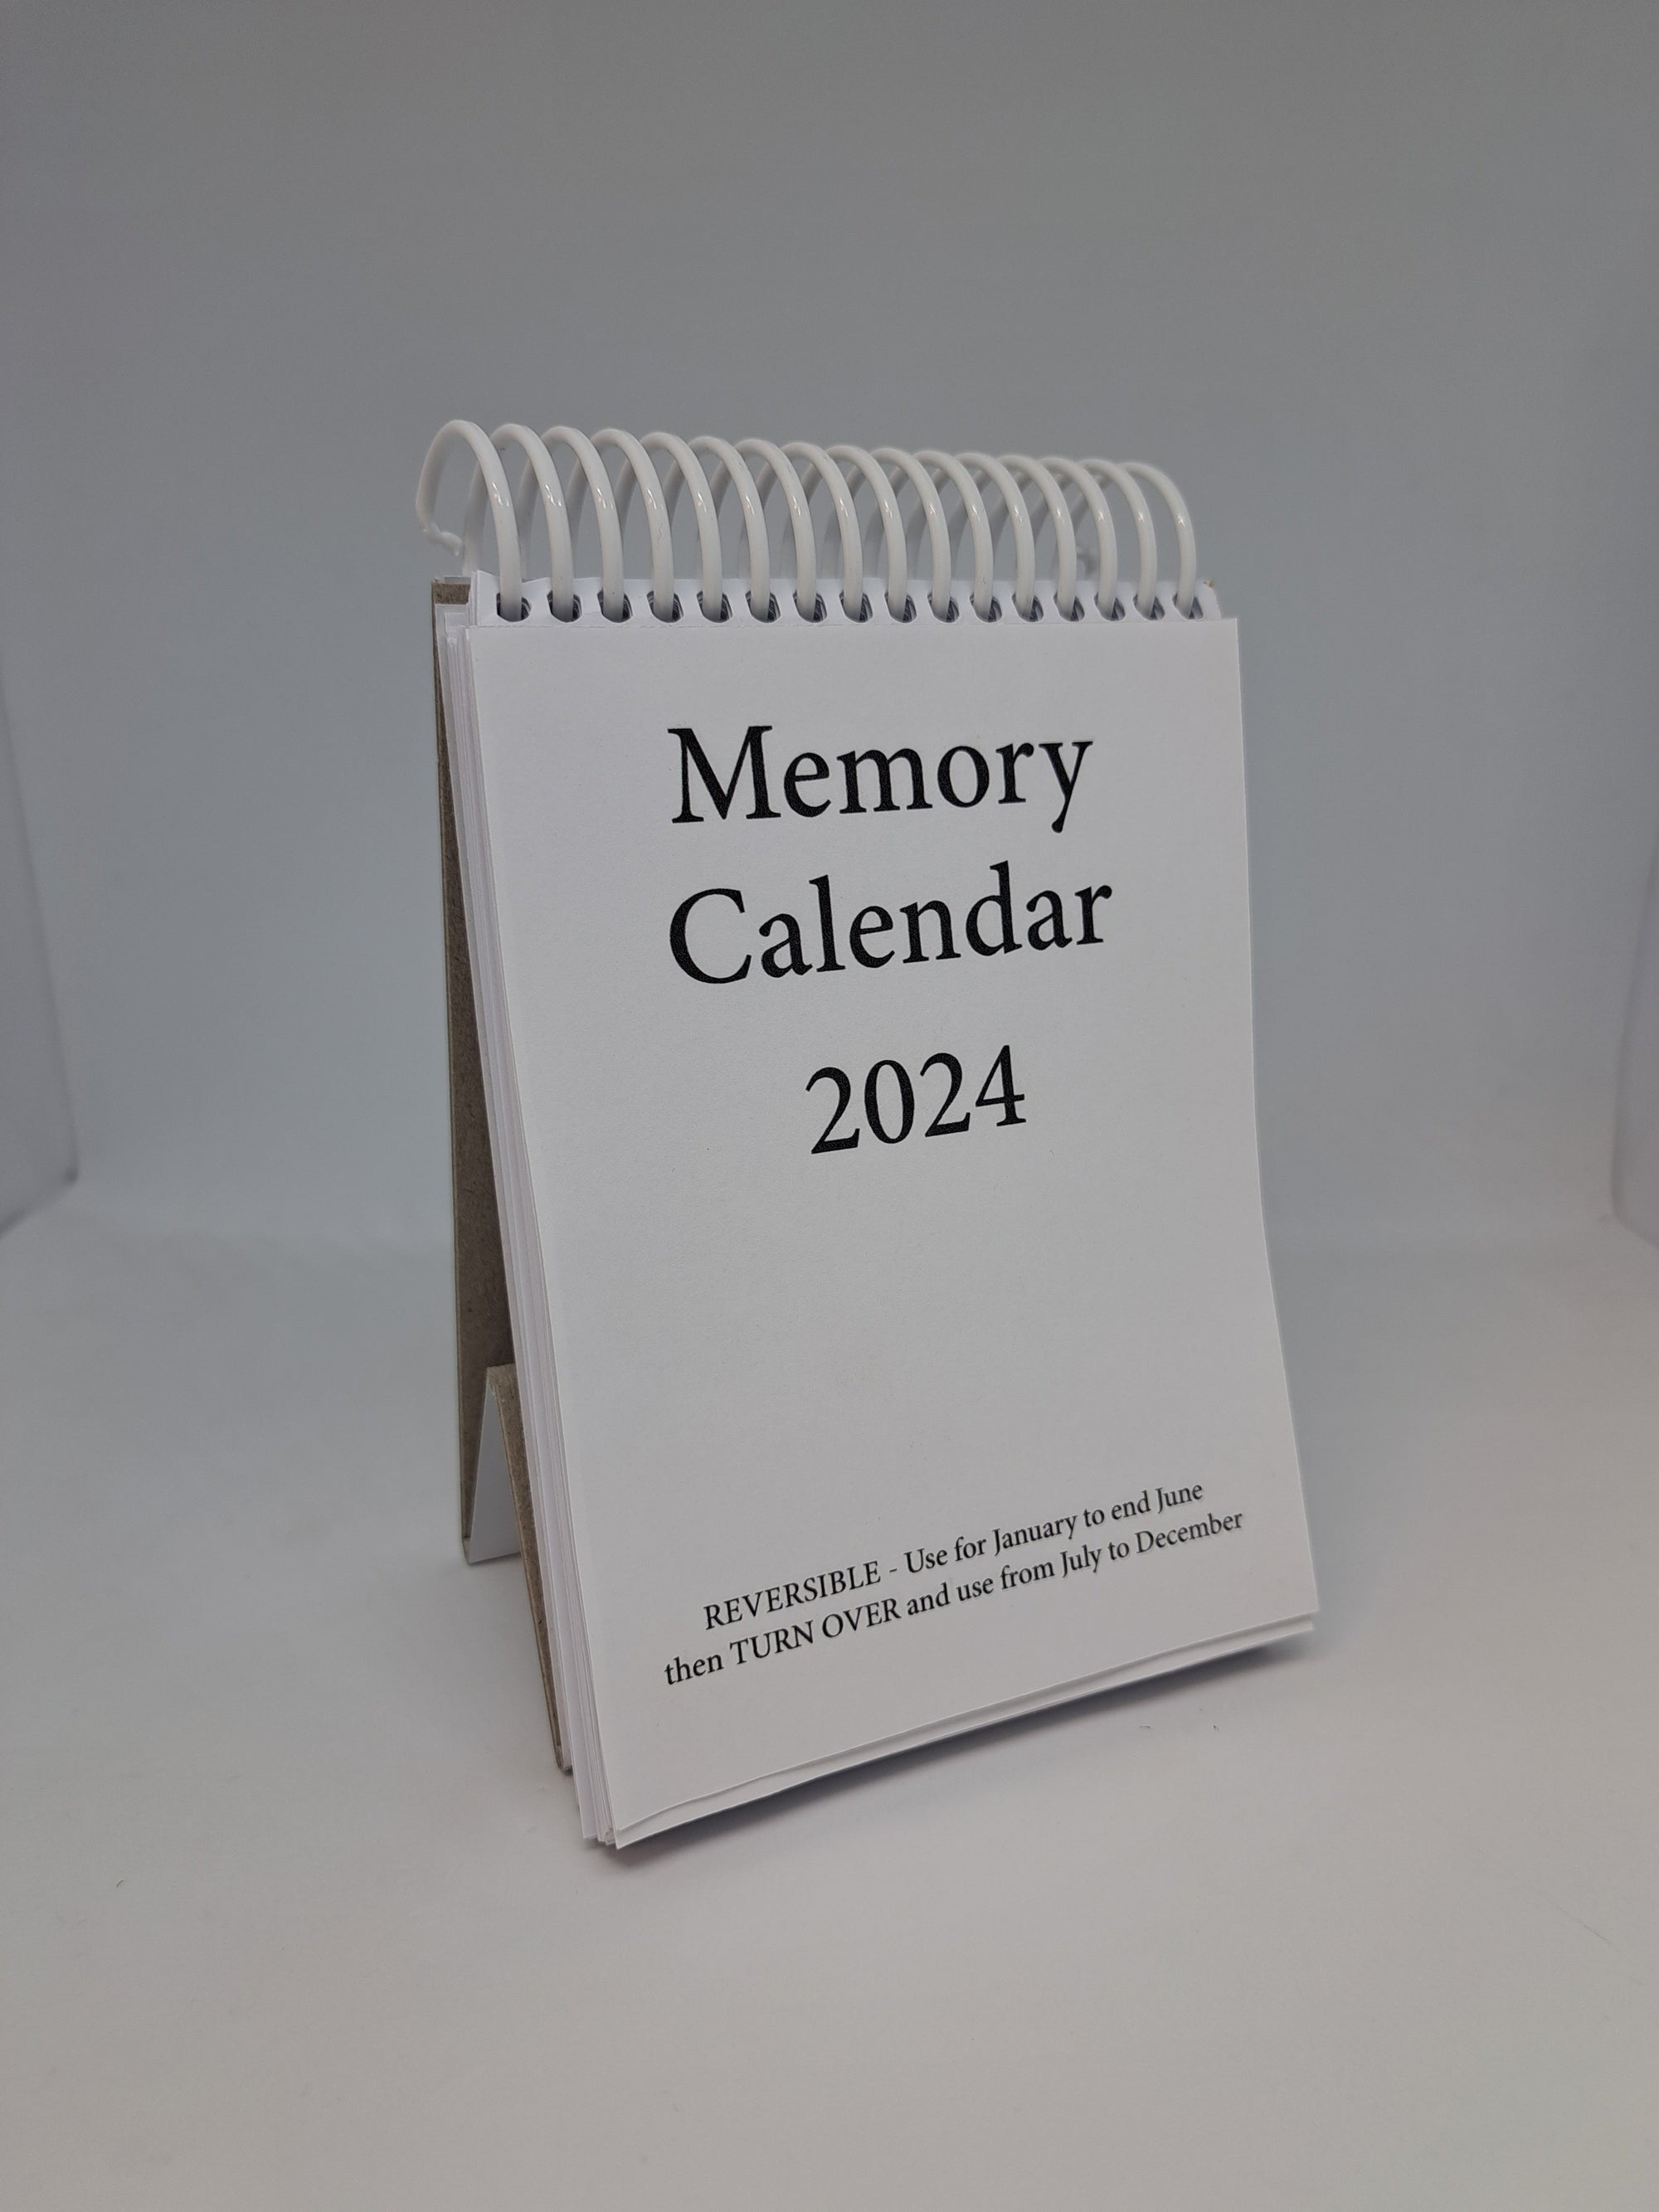 Memory calendar 2024